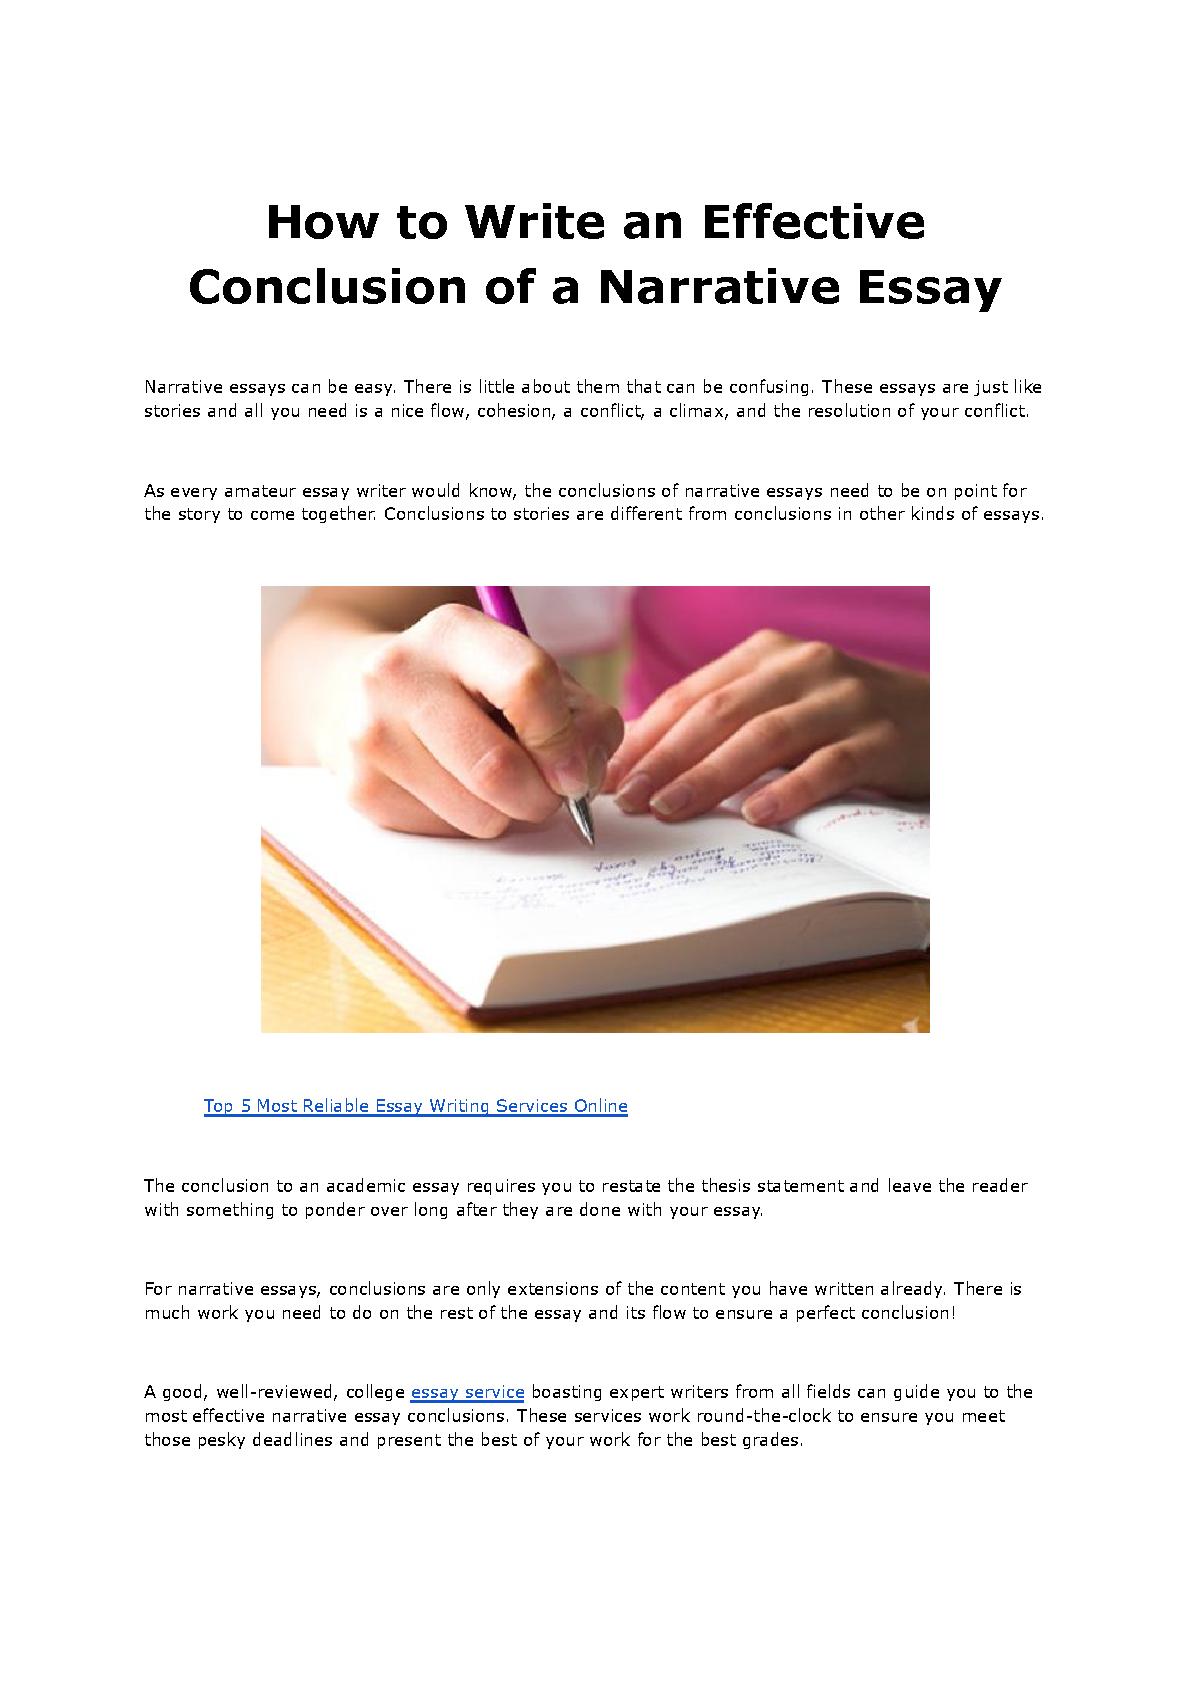 how to write a conclusion of a narrative essay